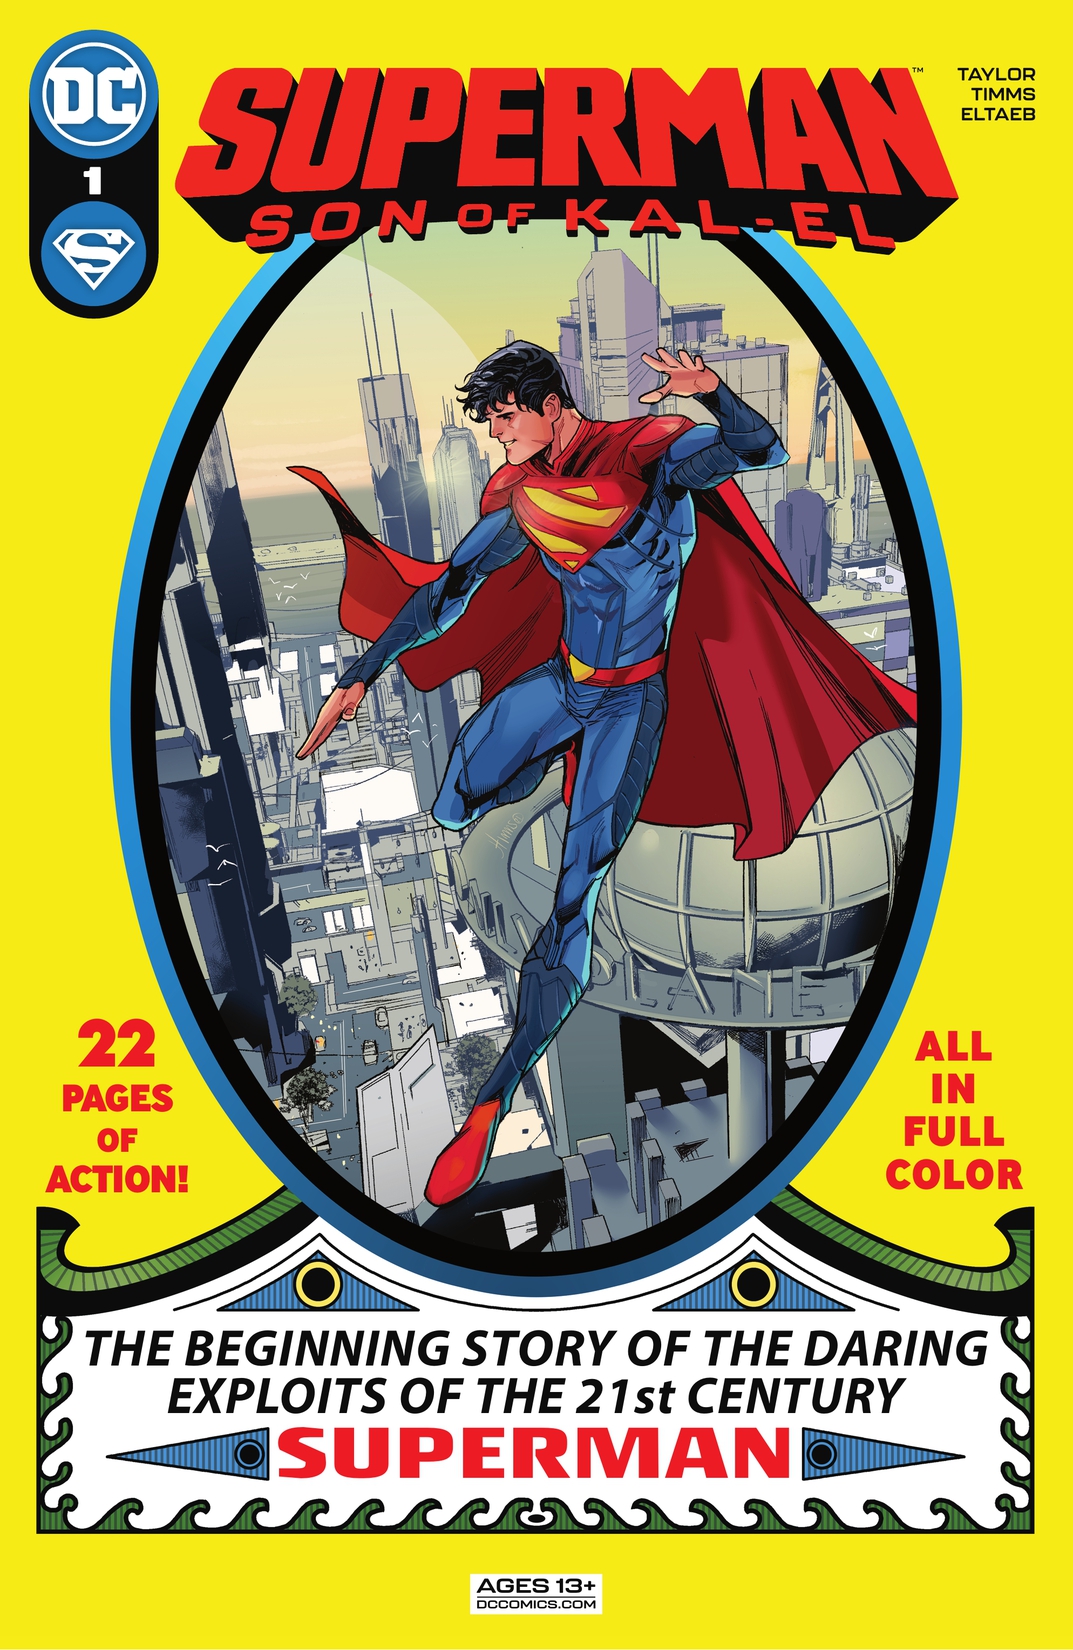 Superman: Son of Kal-El #1 preview images